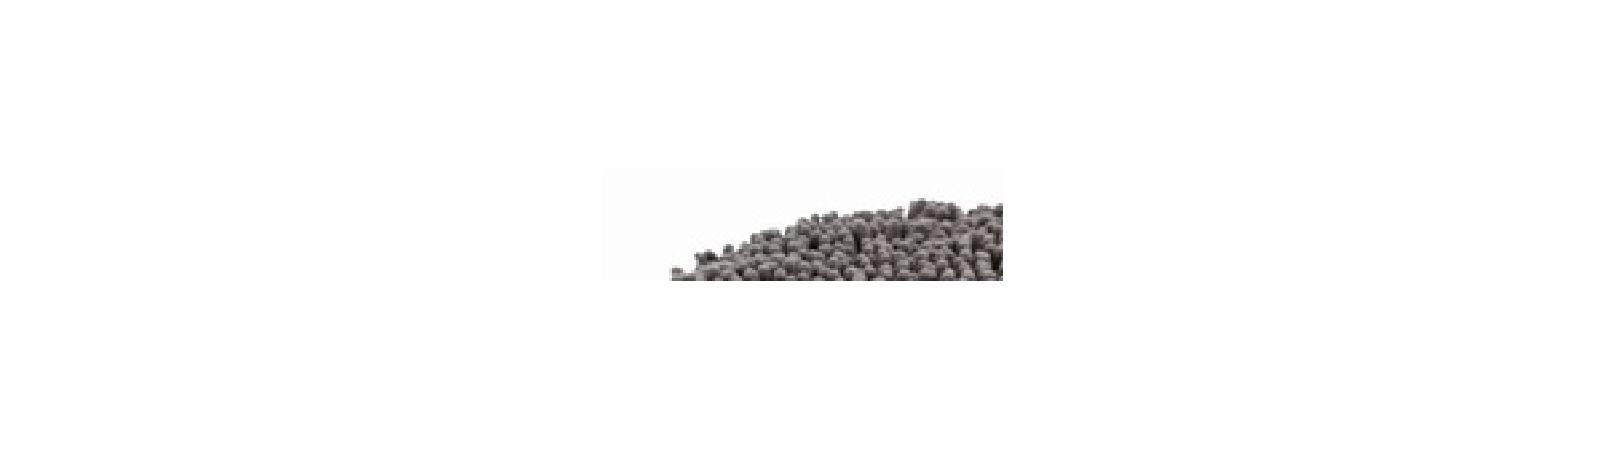 Trixie Грязезащитный коврик для лежака Sleeper 6 98 x 60 см тёмно-серый 28638 0,644 кг 50579